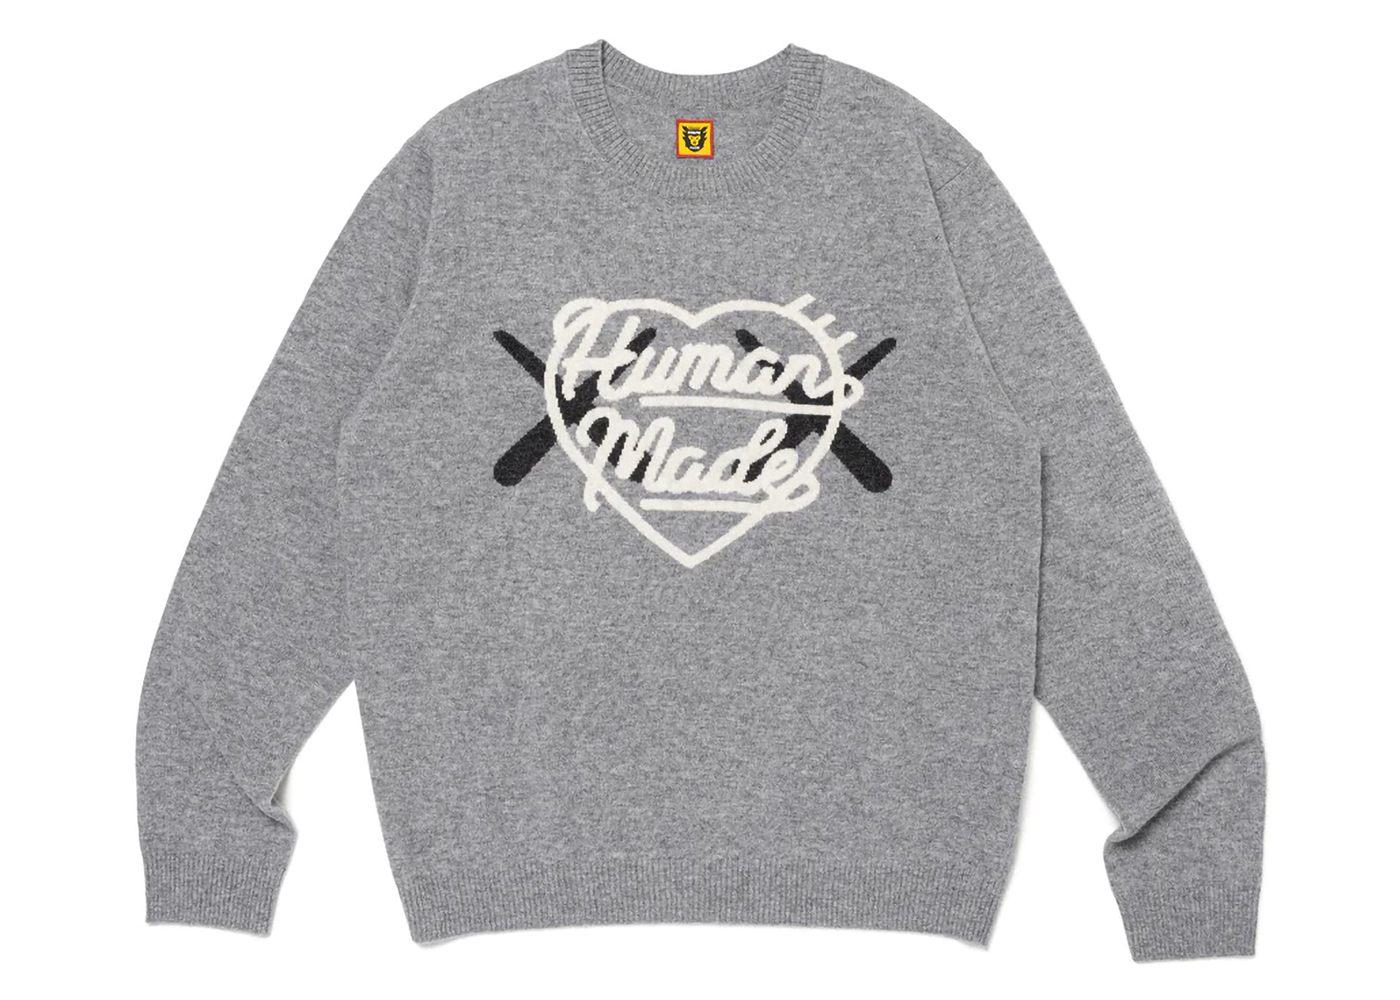 Human Made x KAWS Knit Sweater Grey